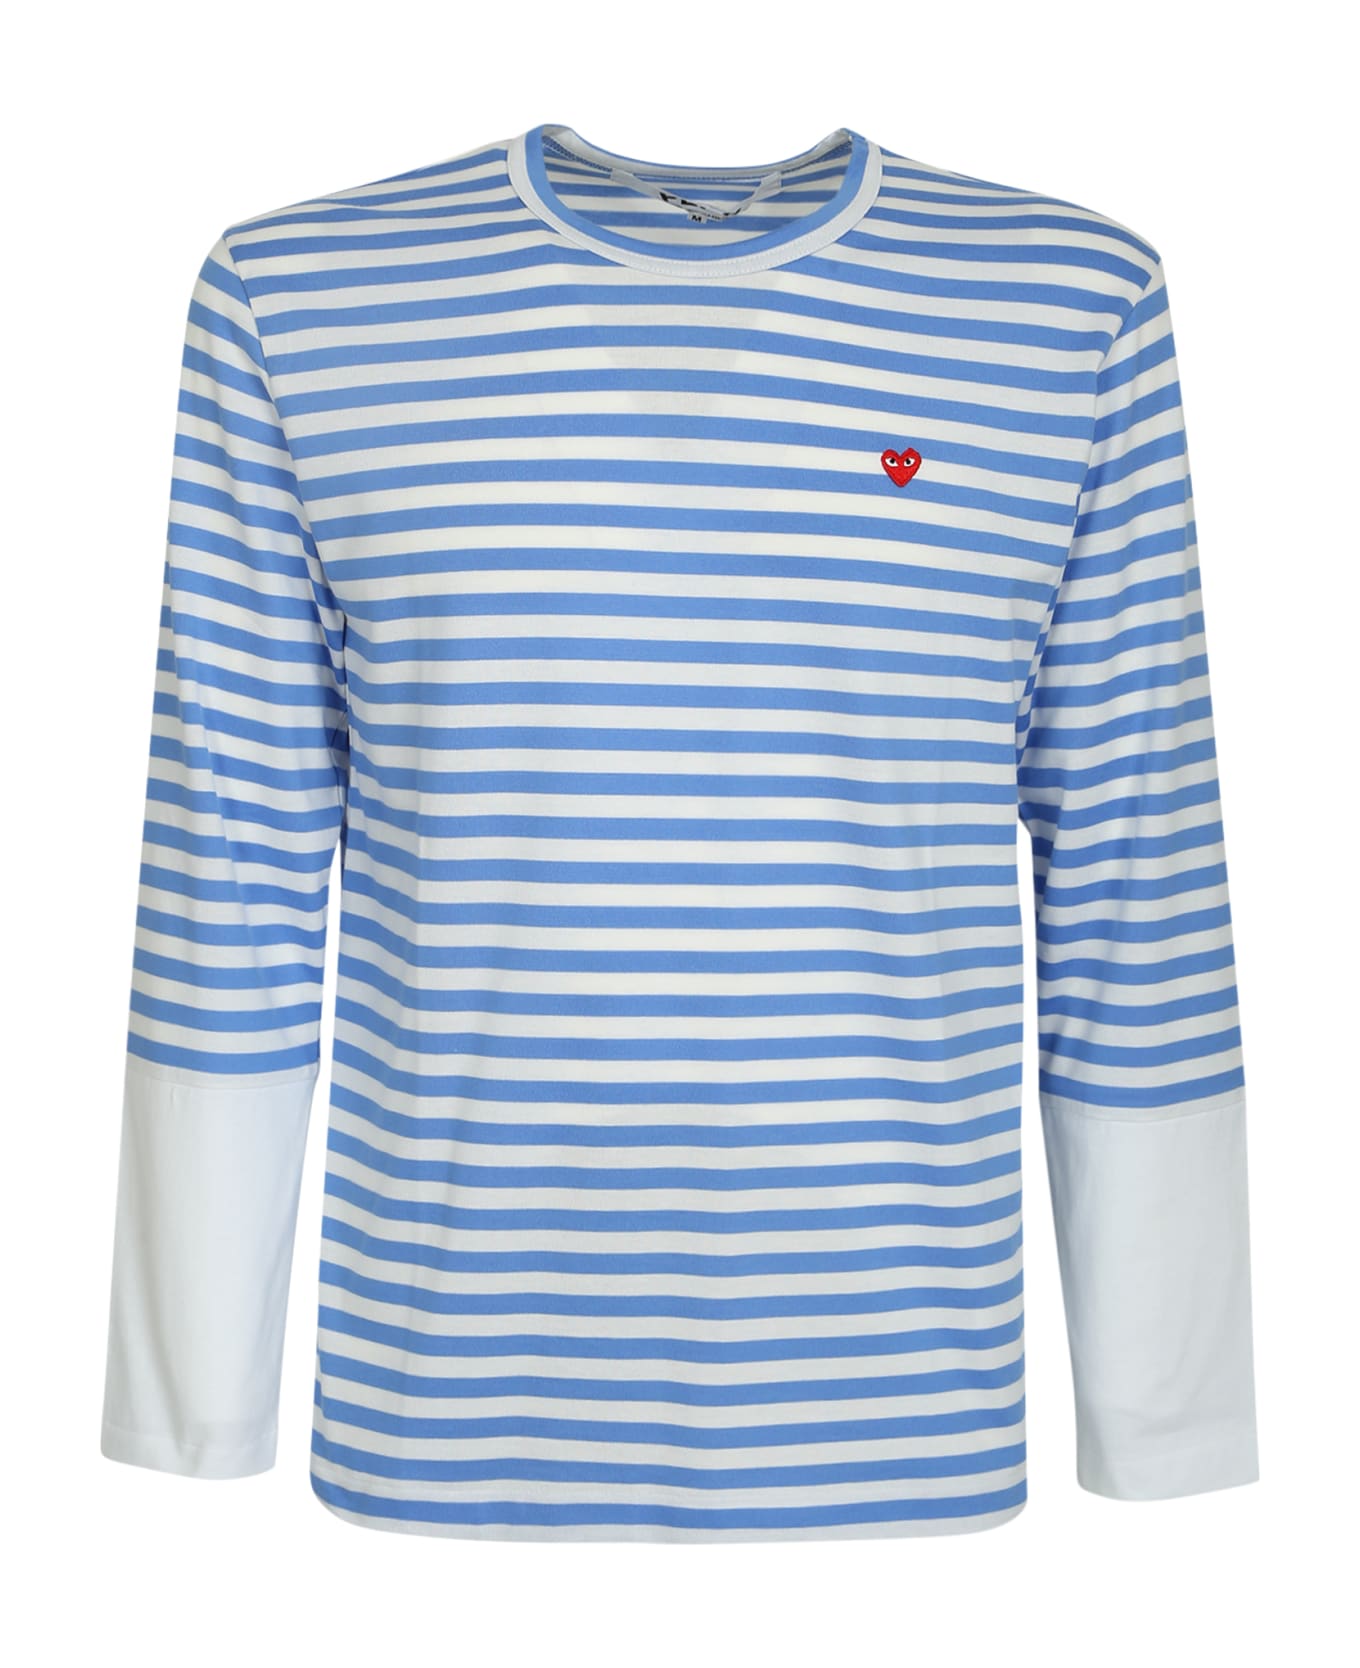 Comme des Garçons Shirt Boy Striped Detail T-shirt - Blue White